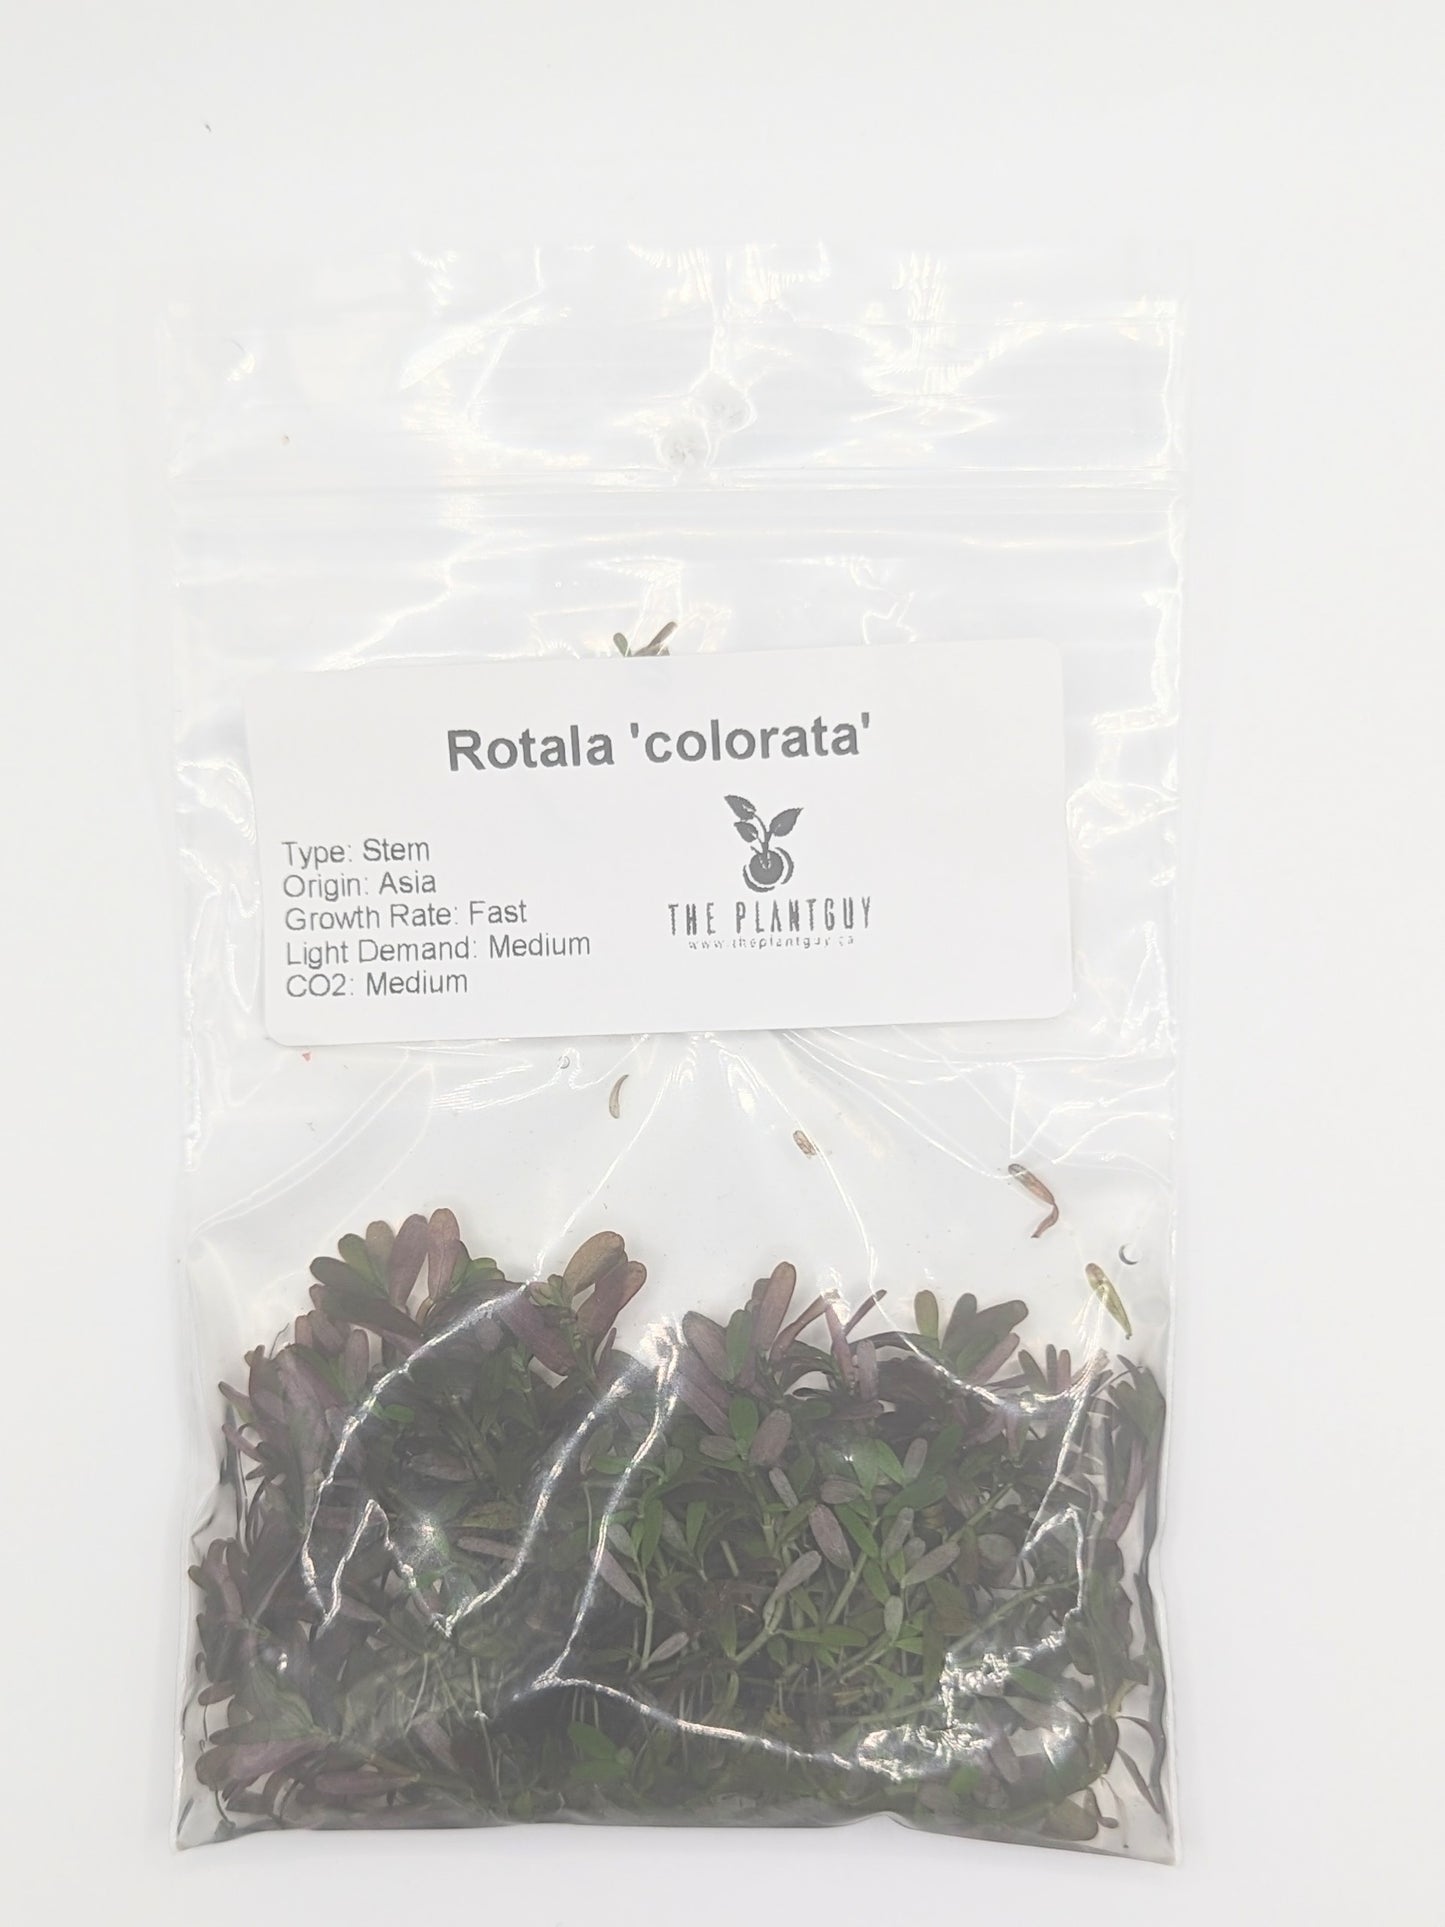 Rotala colorata (PGTC bag)